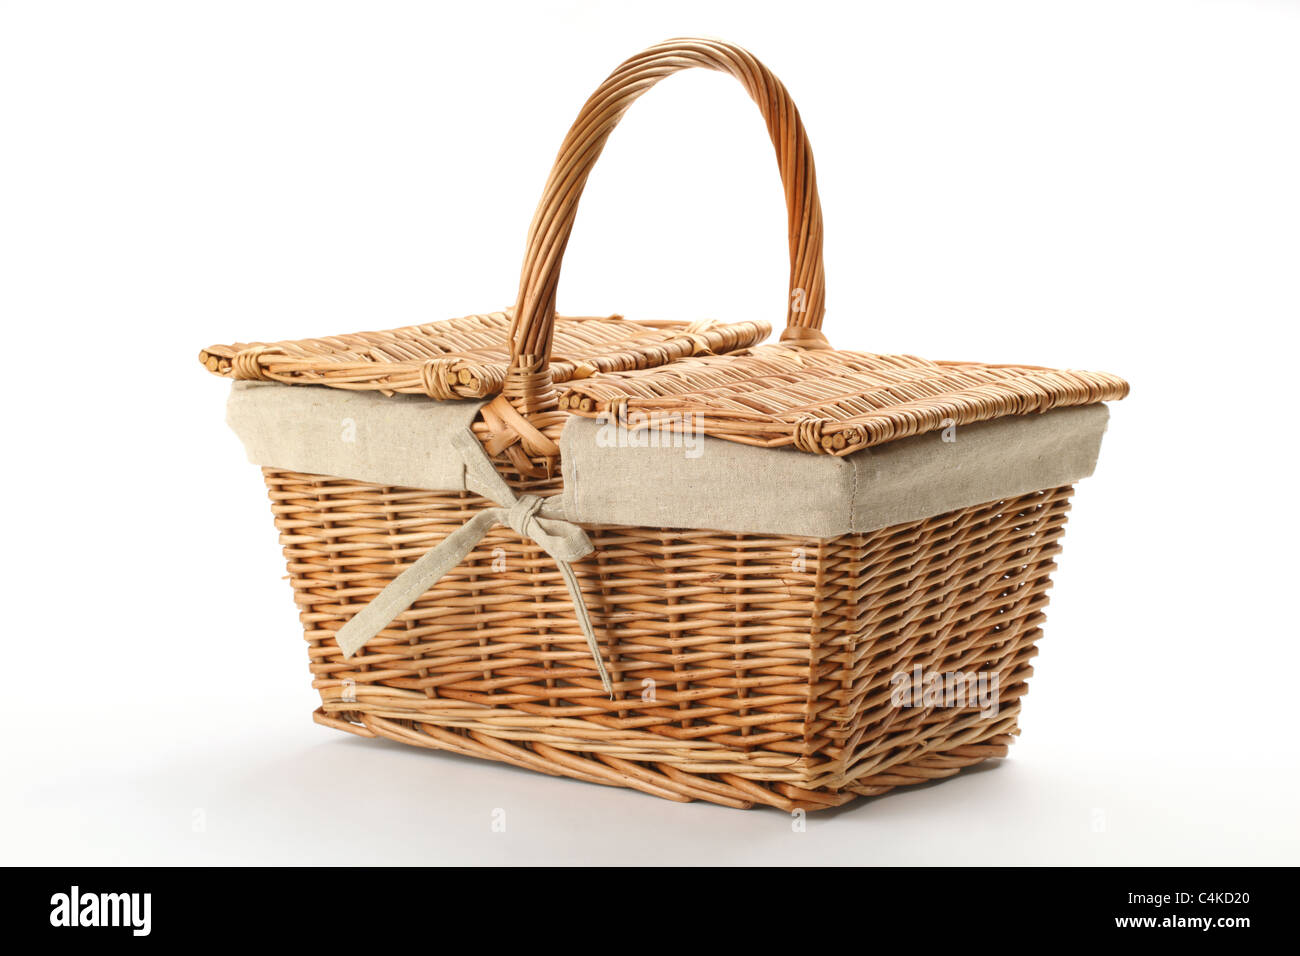 Wicker picnic basket on white background. Stock Photo